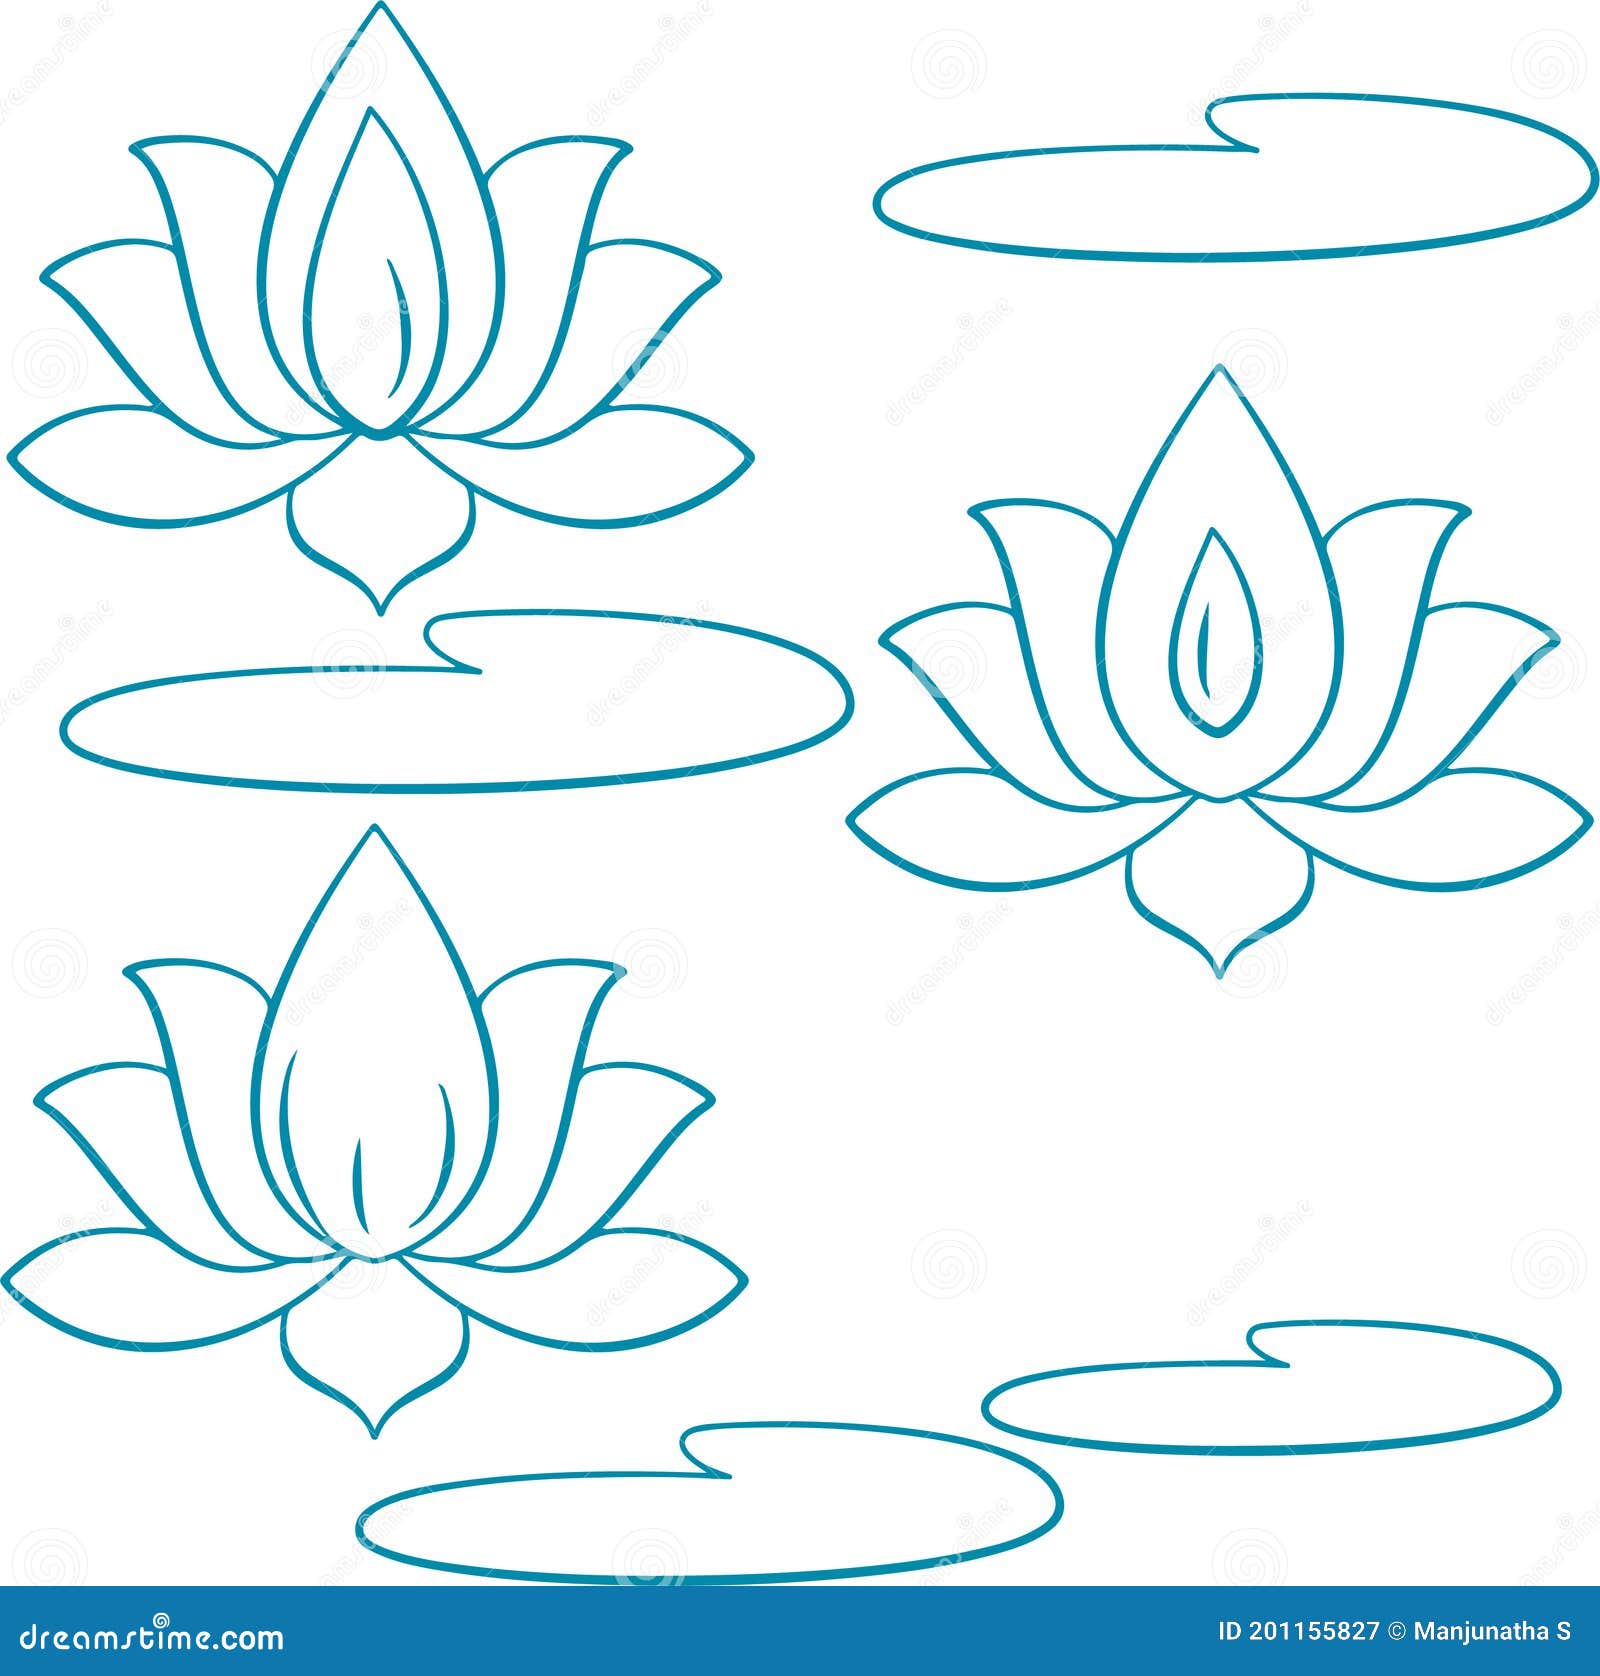 Line art lotus flower symmetrical drawing by Soppeldunk on DeviantArt-saigonsouth.com.vn